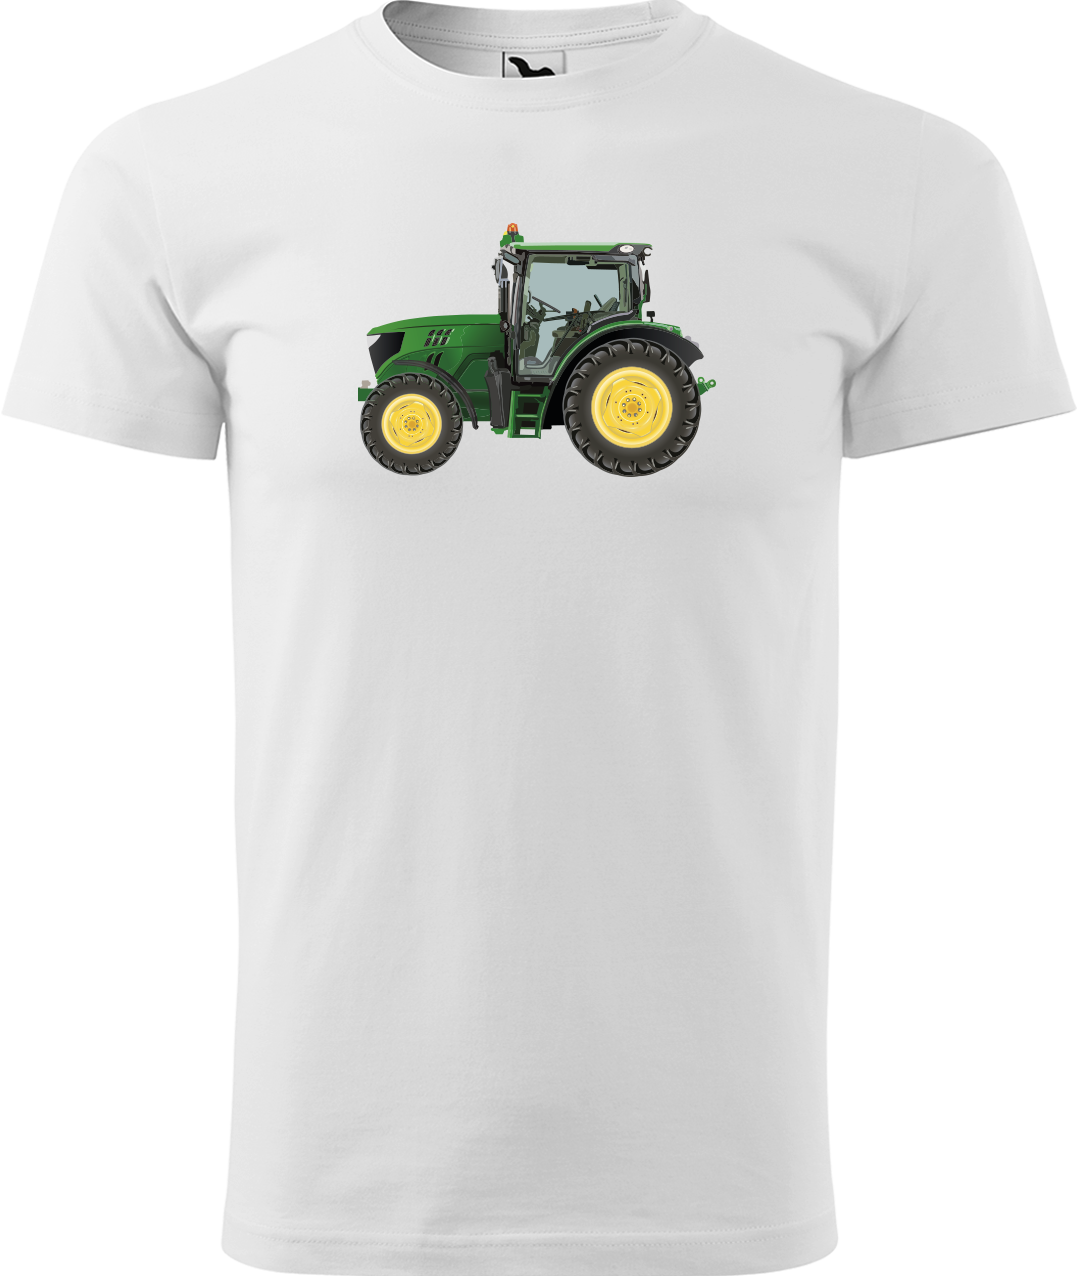 Tričko s traktorem - Zelený traktor Velikost: 3XL, Barva: Bílá (00)